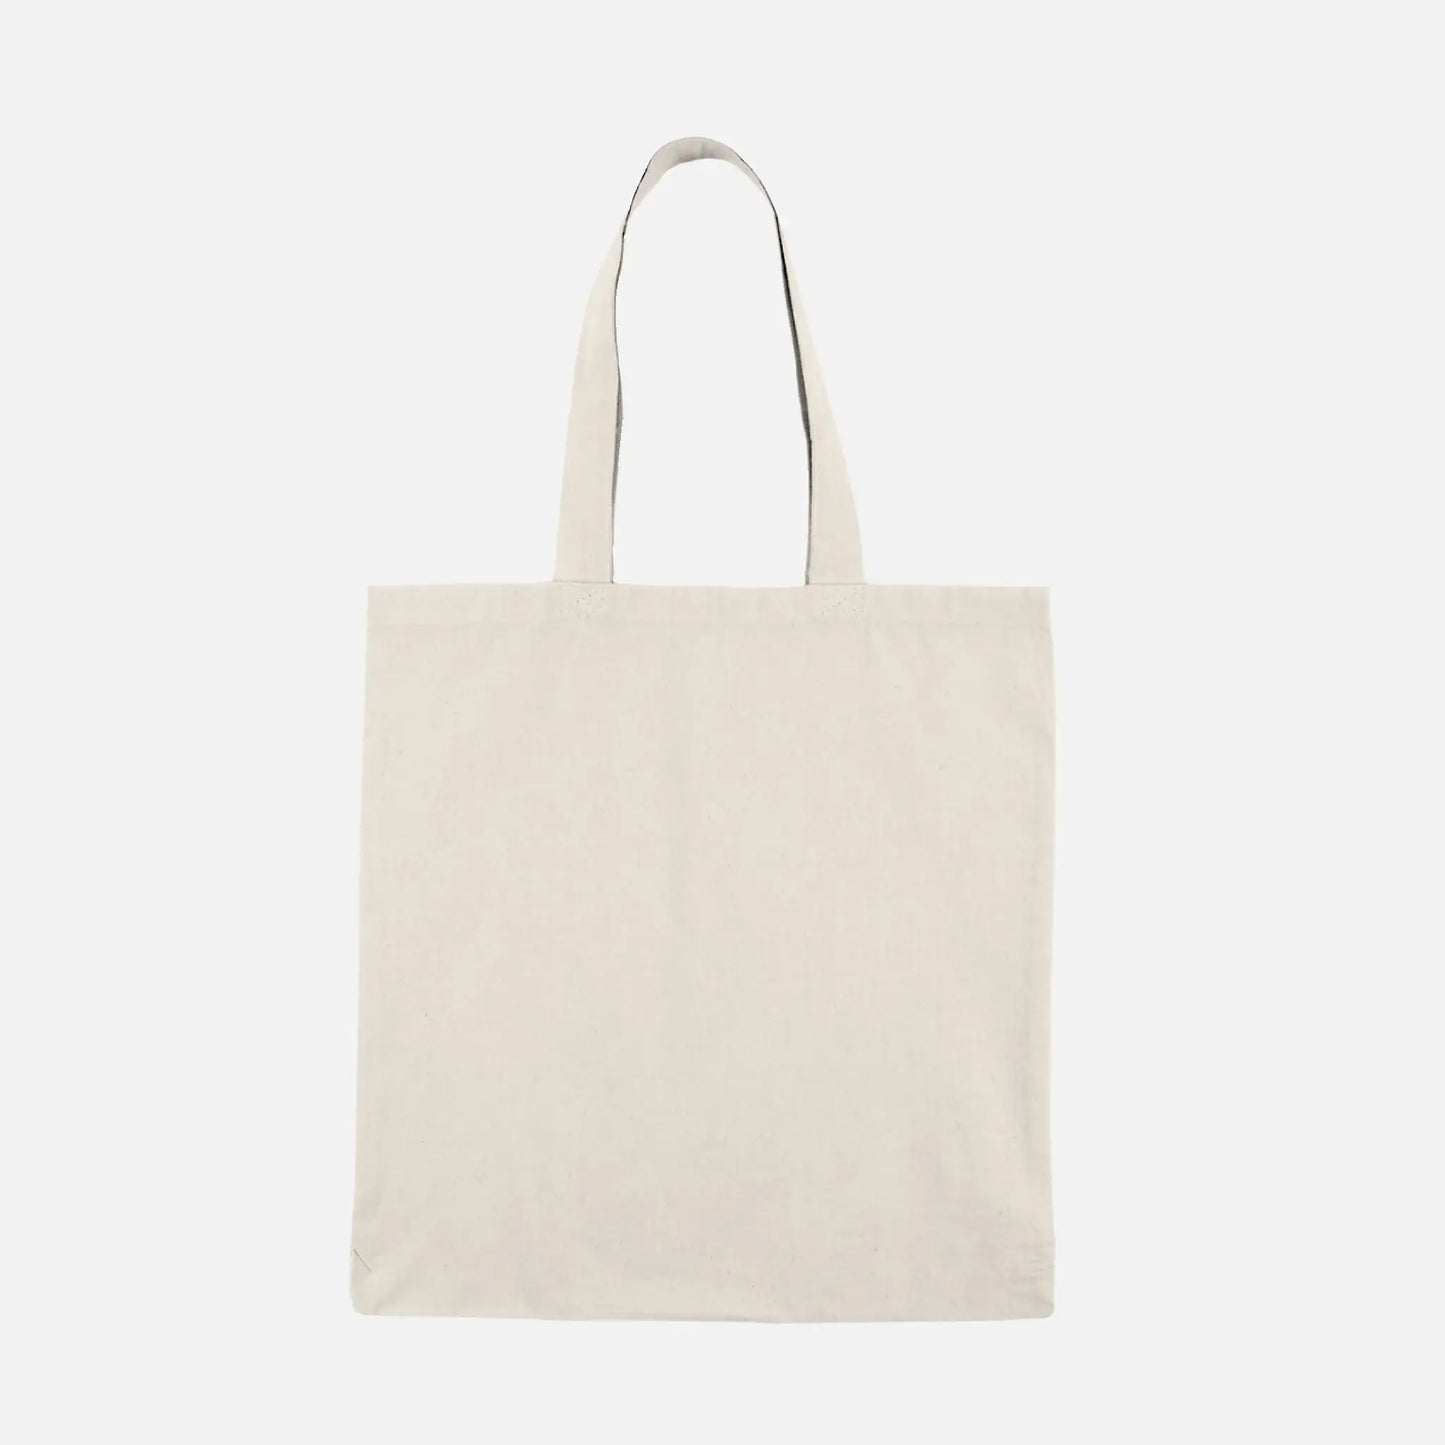 ᐊᑐᒃᑲᓐᓂᕈᓐᓇᖅᑐᑦ (Recycling) Tote Bag